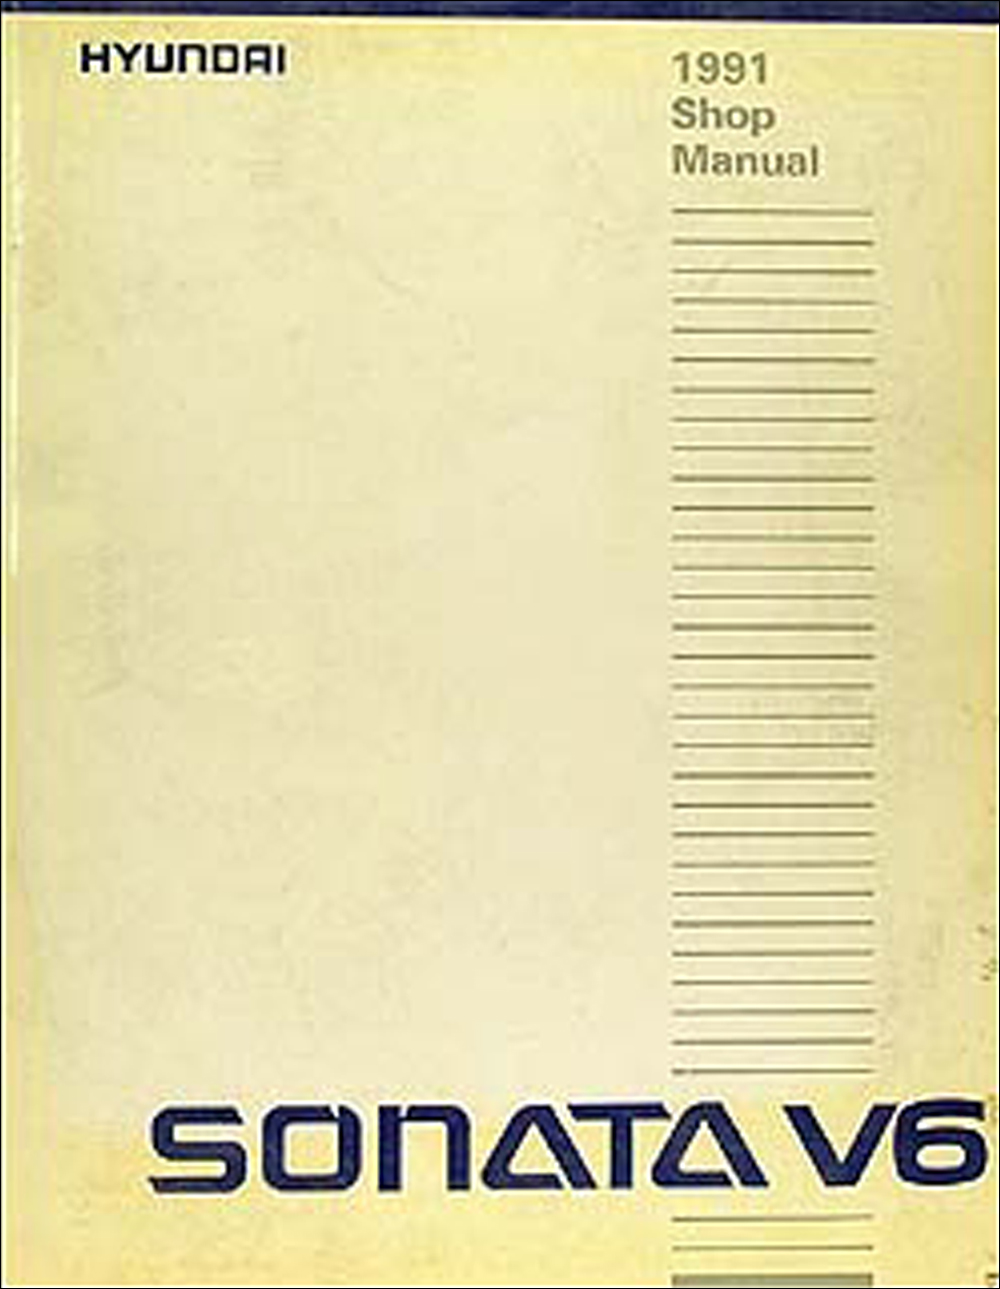 1991 Hyundai Sonata 6 cylinder Shop Manual Original